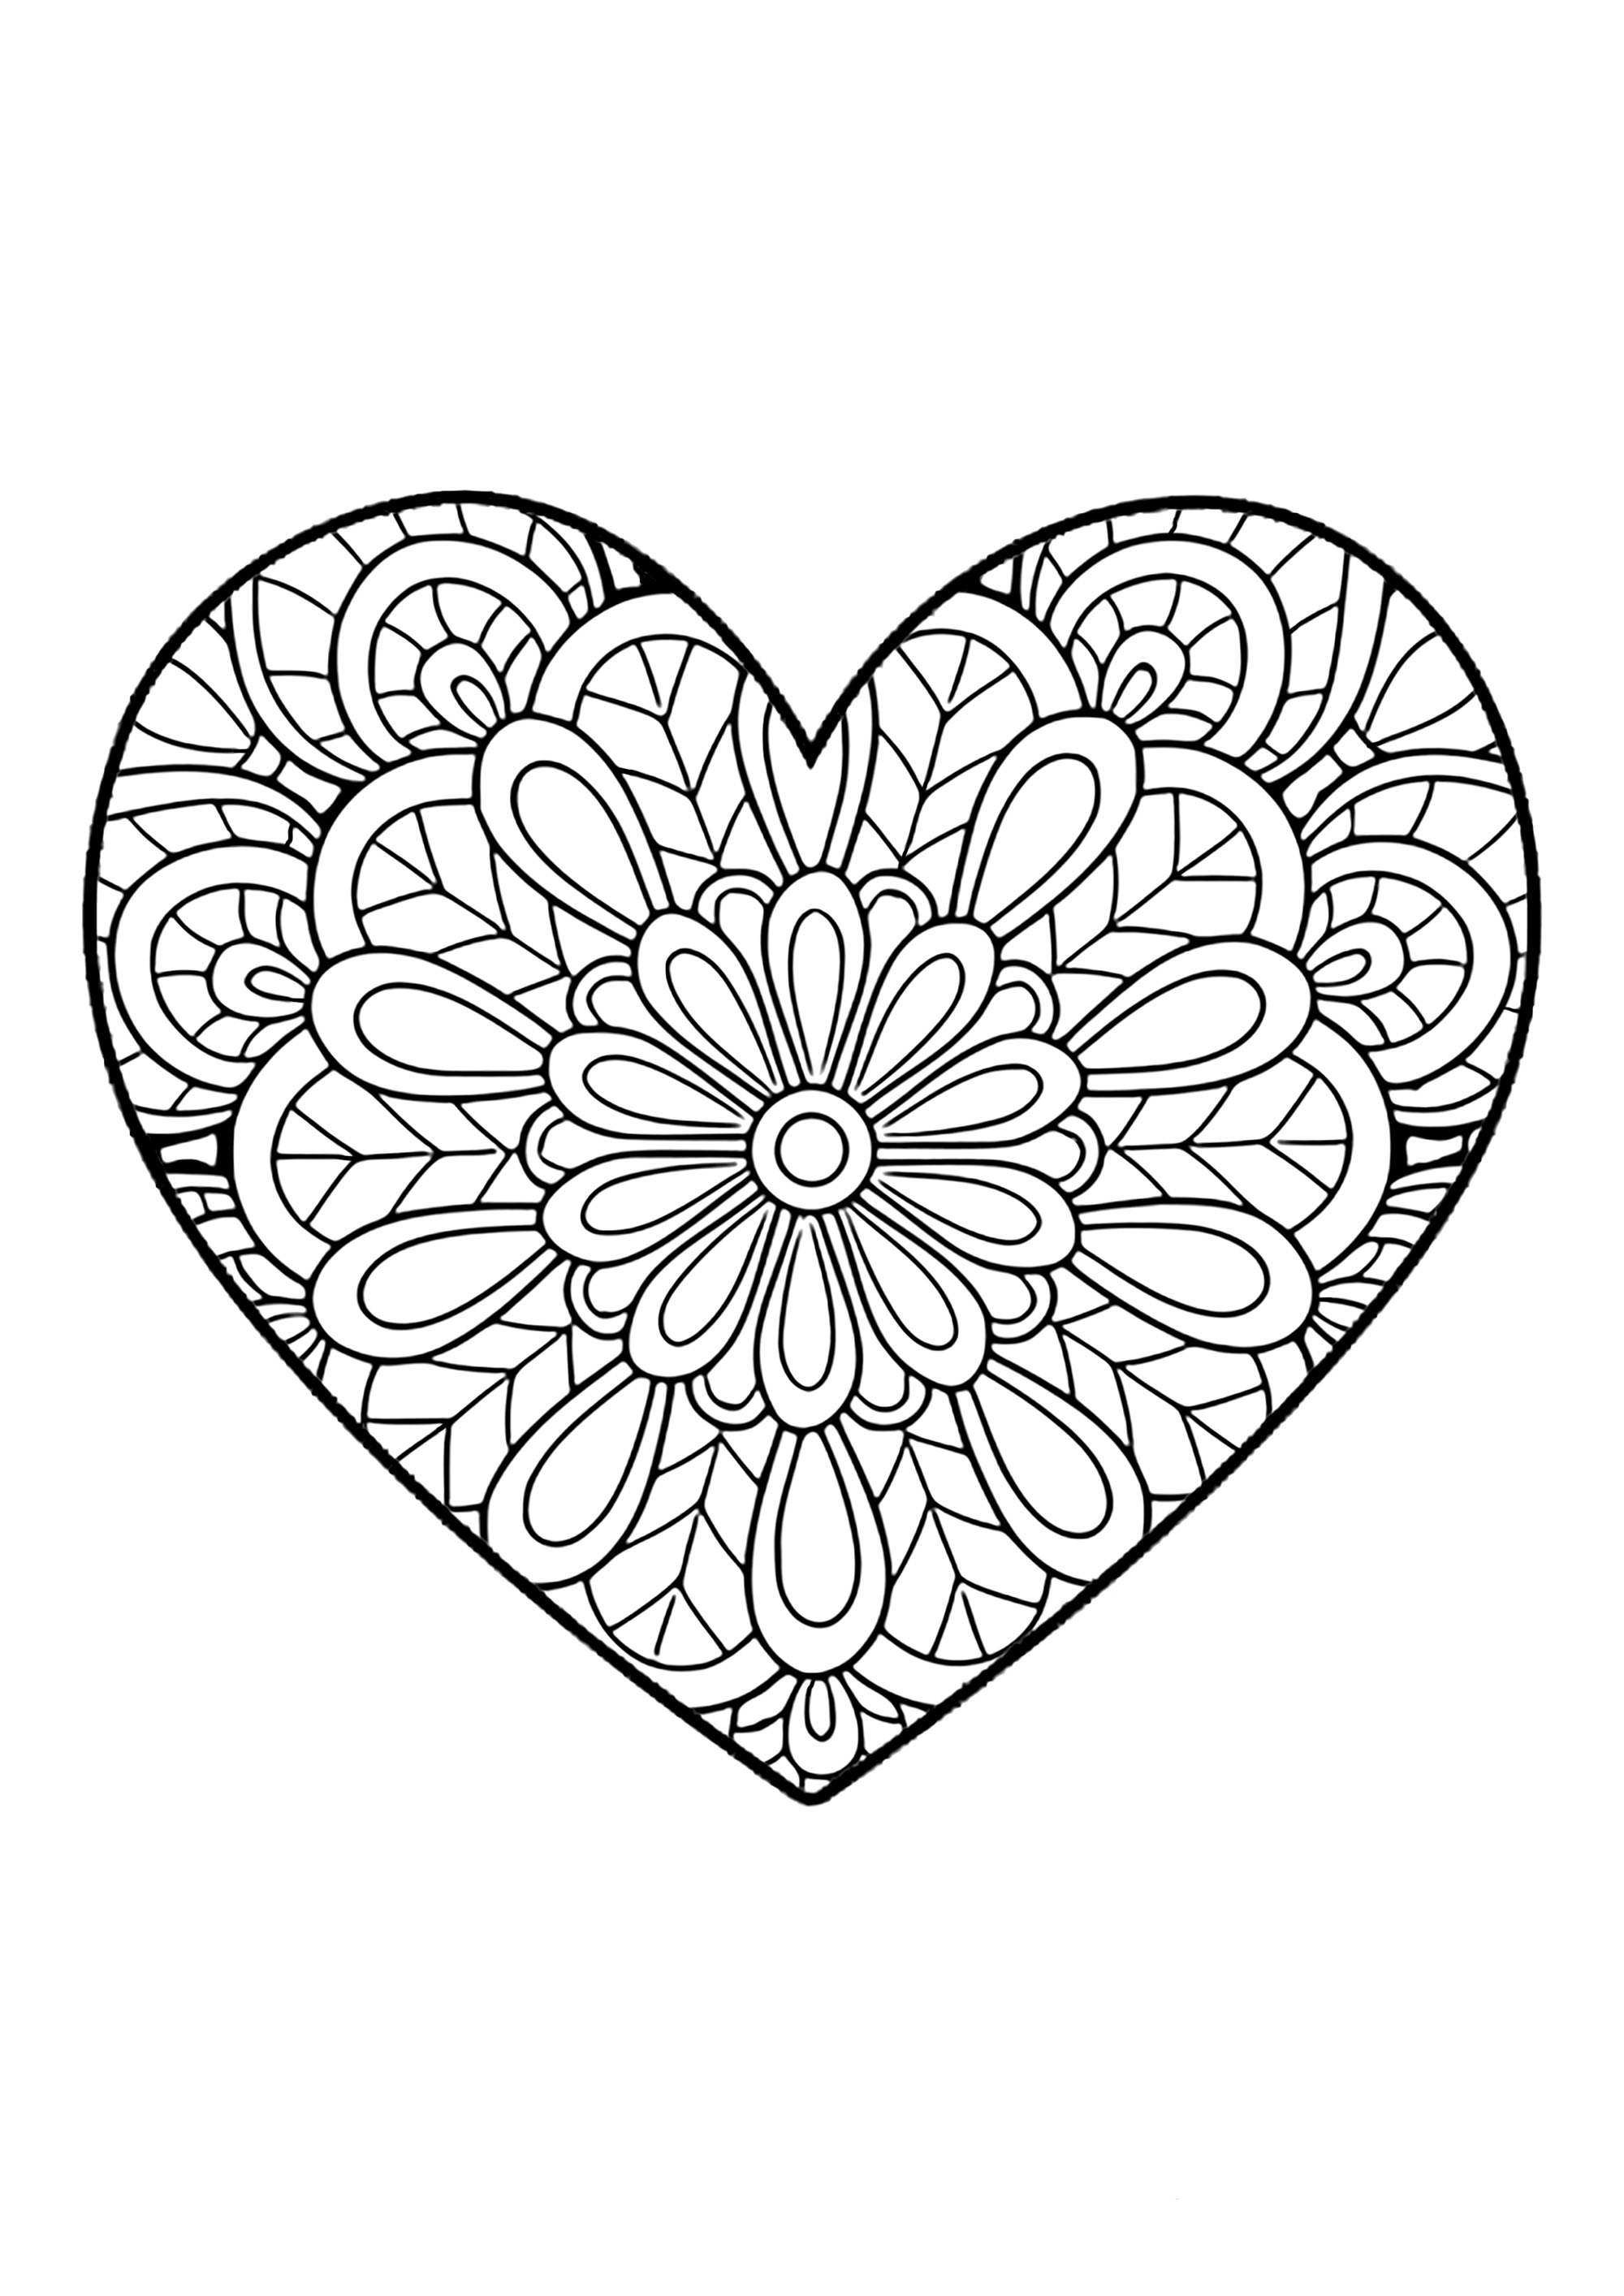 Heart patterns with simple internal motifs